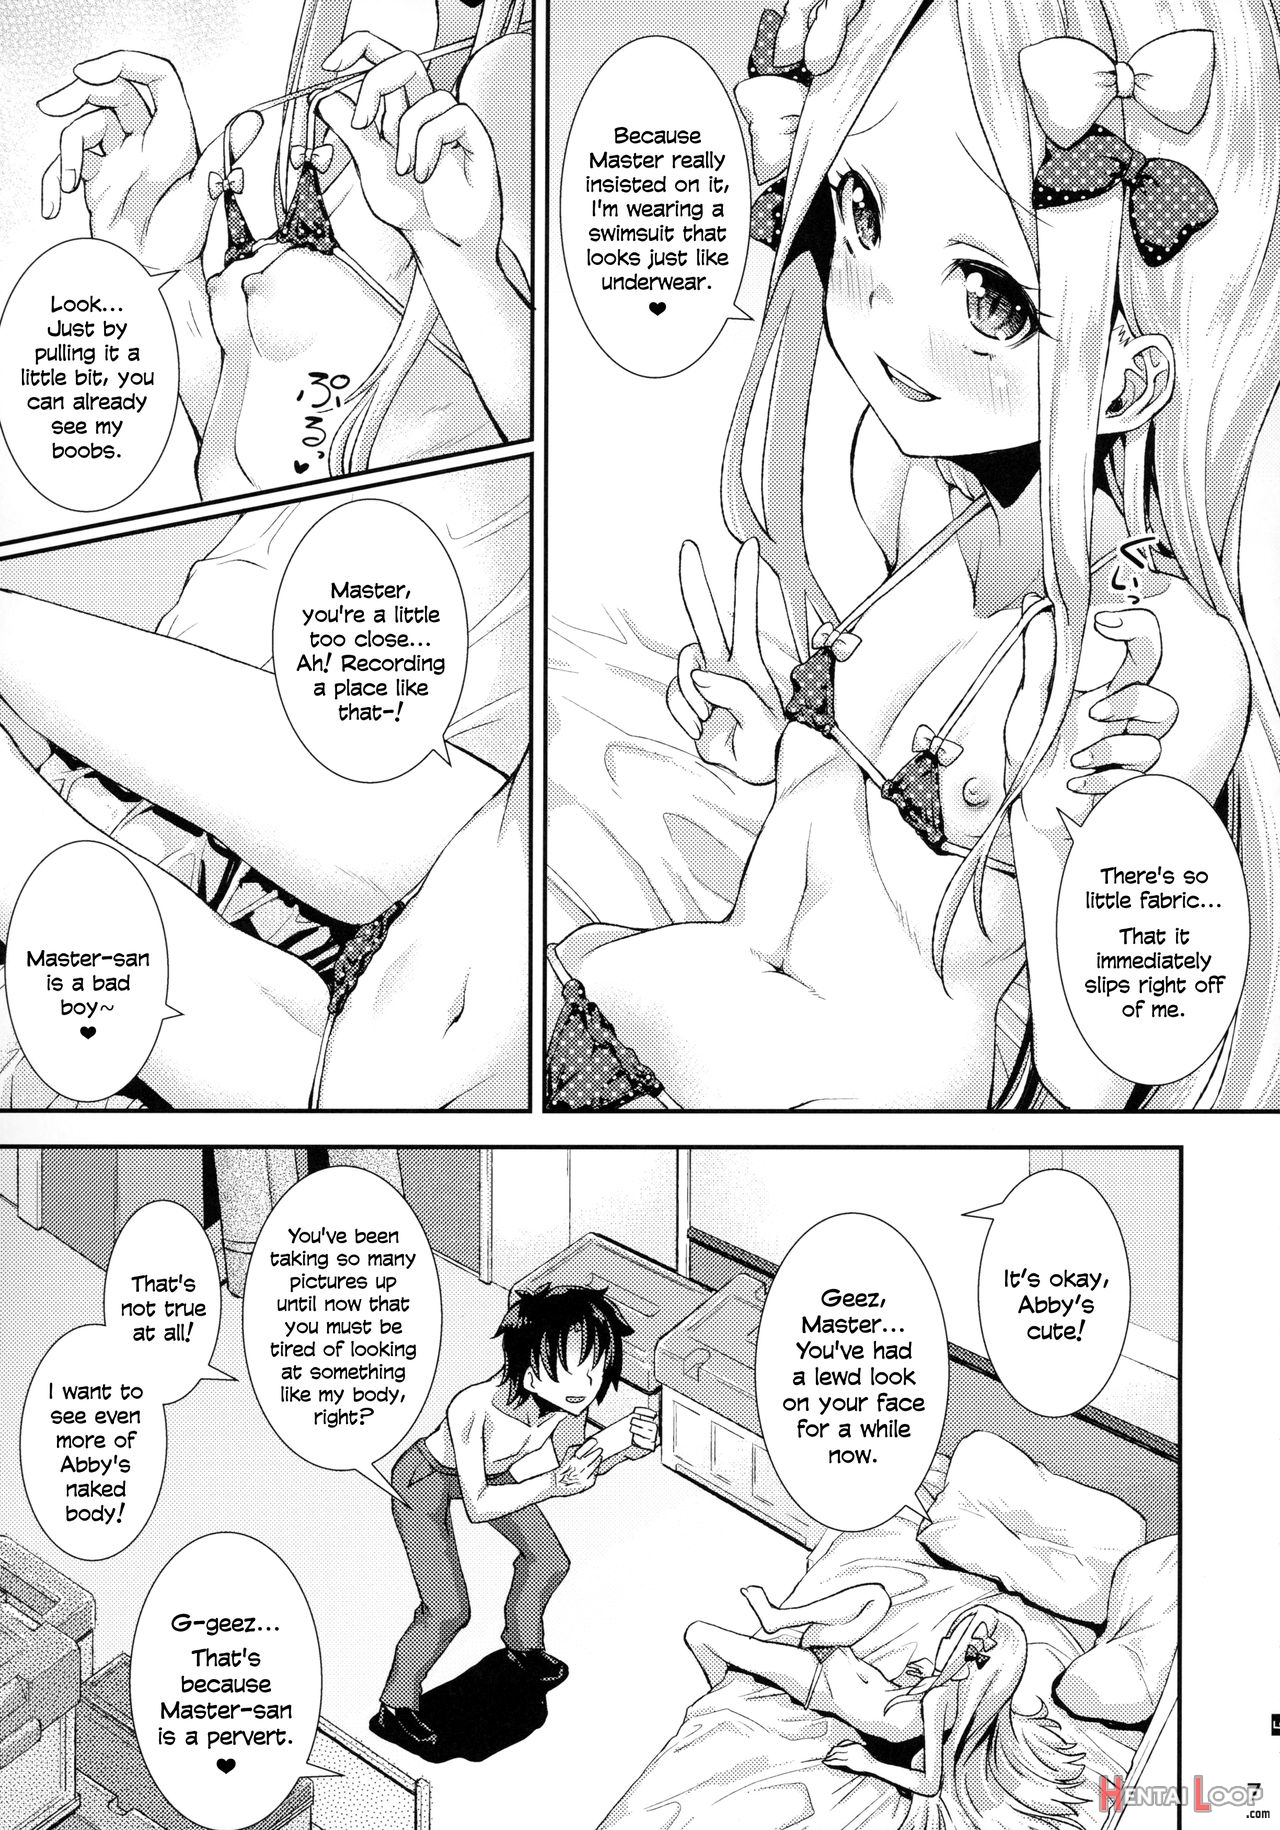 Page 6 of Abby And The Secret Homemade Sex Tape (by Yamazaki Kana)